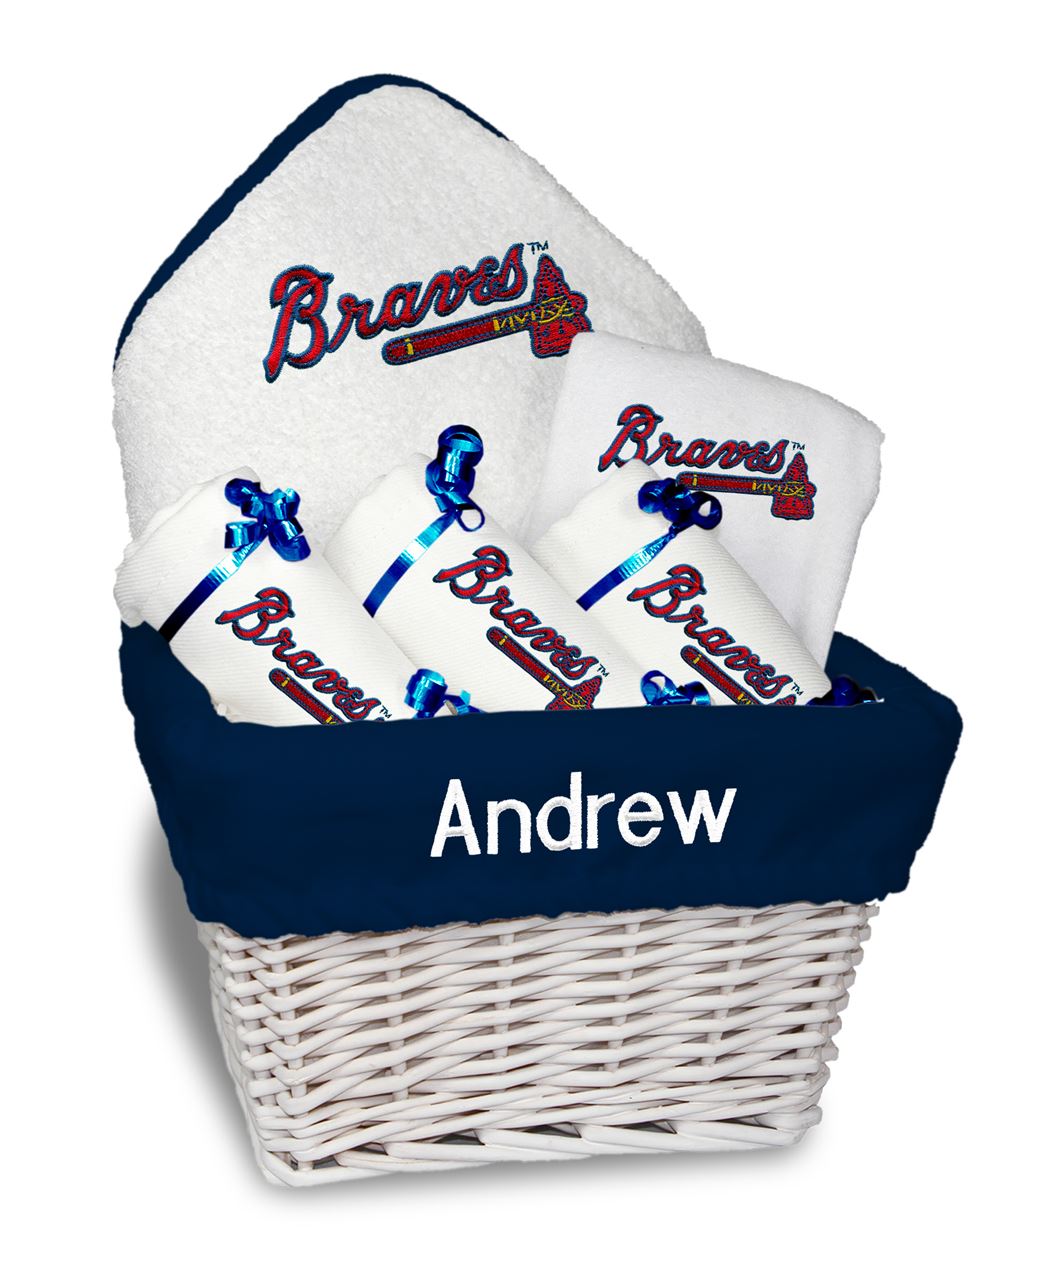 Braves infant/baby clothes Braves baseball baby gift Atlanta